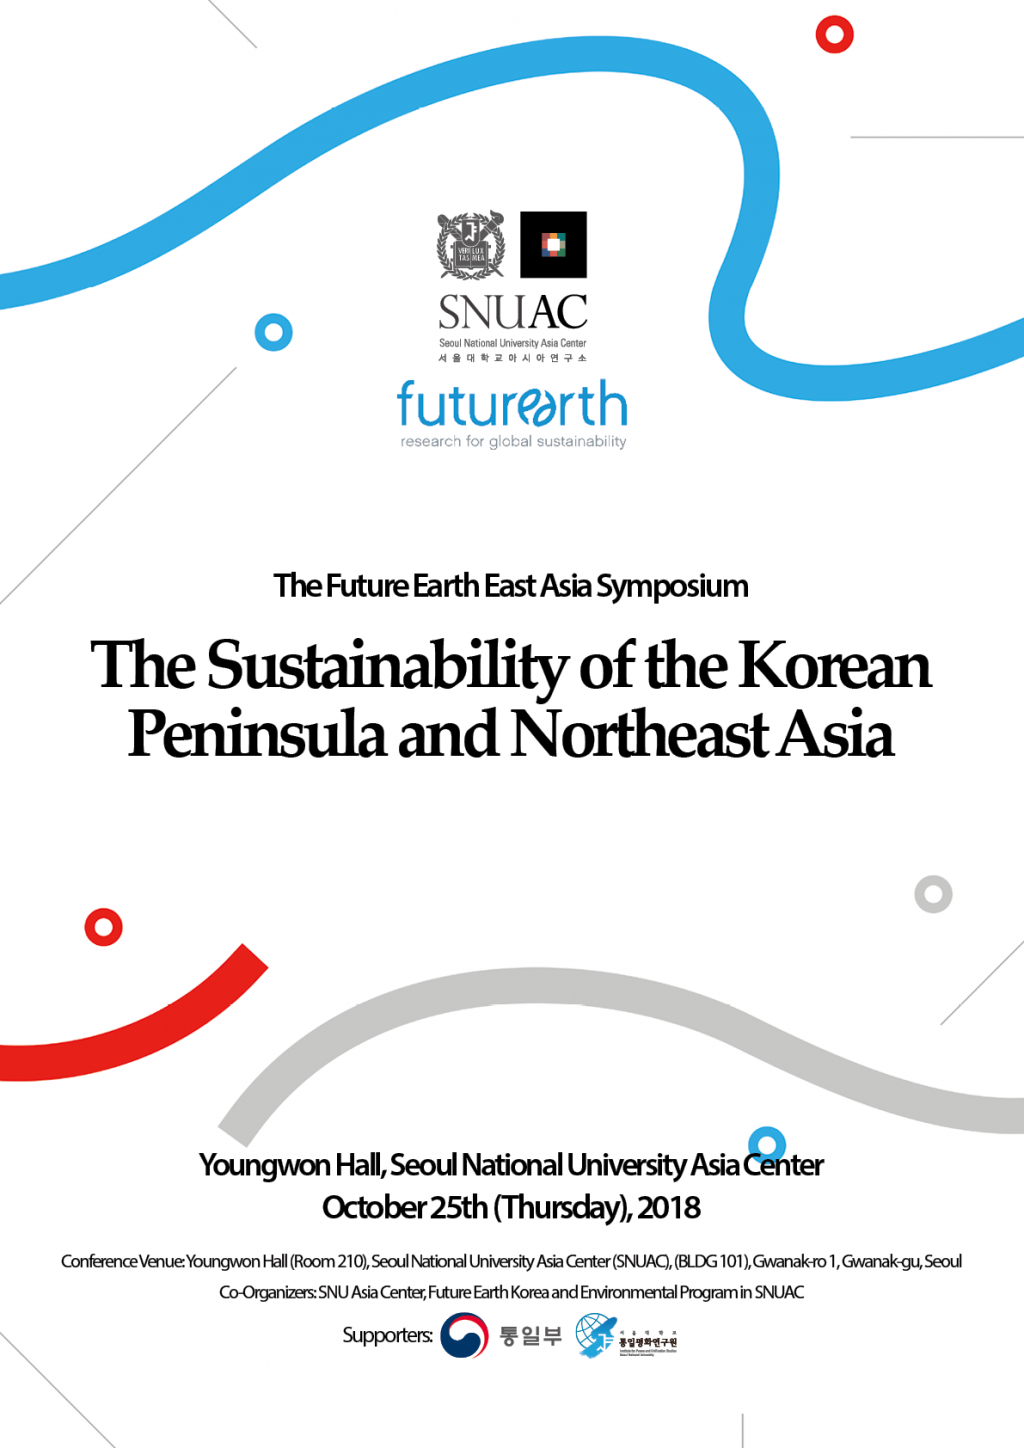 The Future Earth East Asia Symposium: The Sustainability of the Korean Peninsula and Northeast Asia